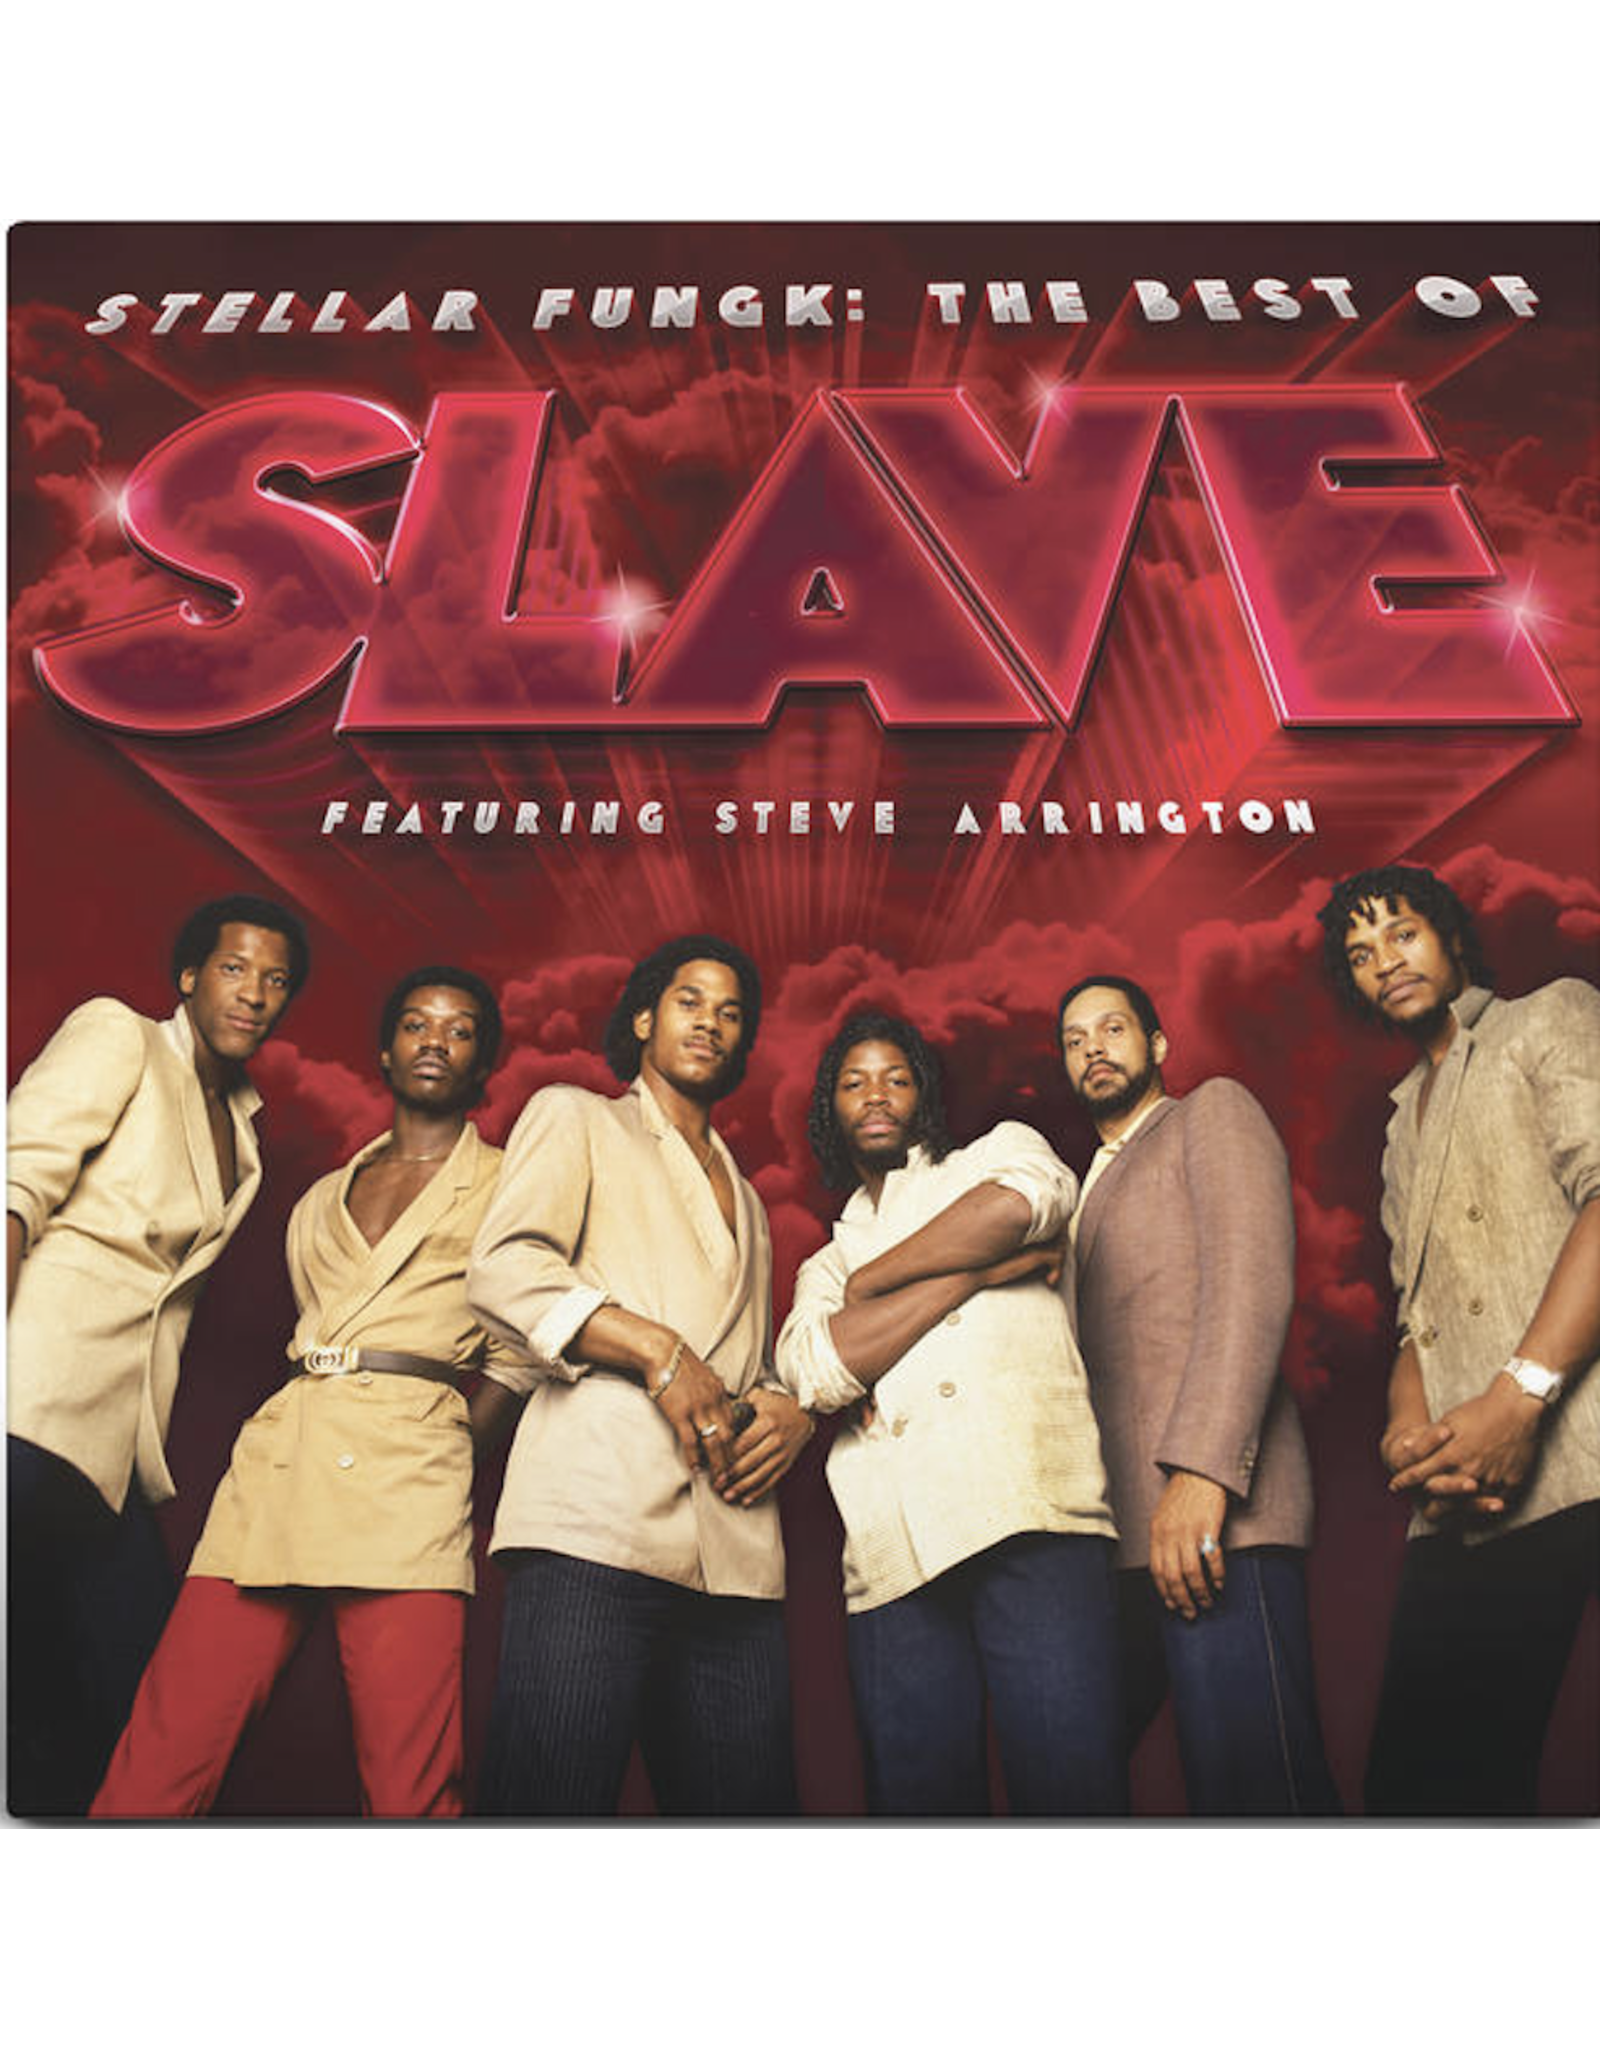 Slave - Stellar Fungk: The Best Of Slave featuring Steve Arrington (Red Vinyl)